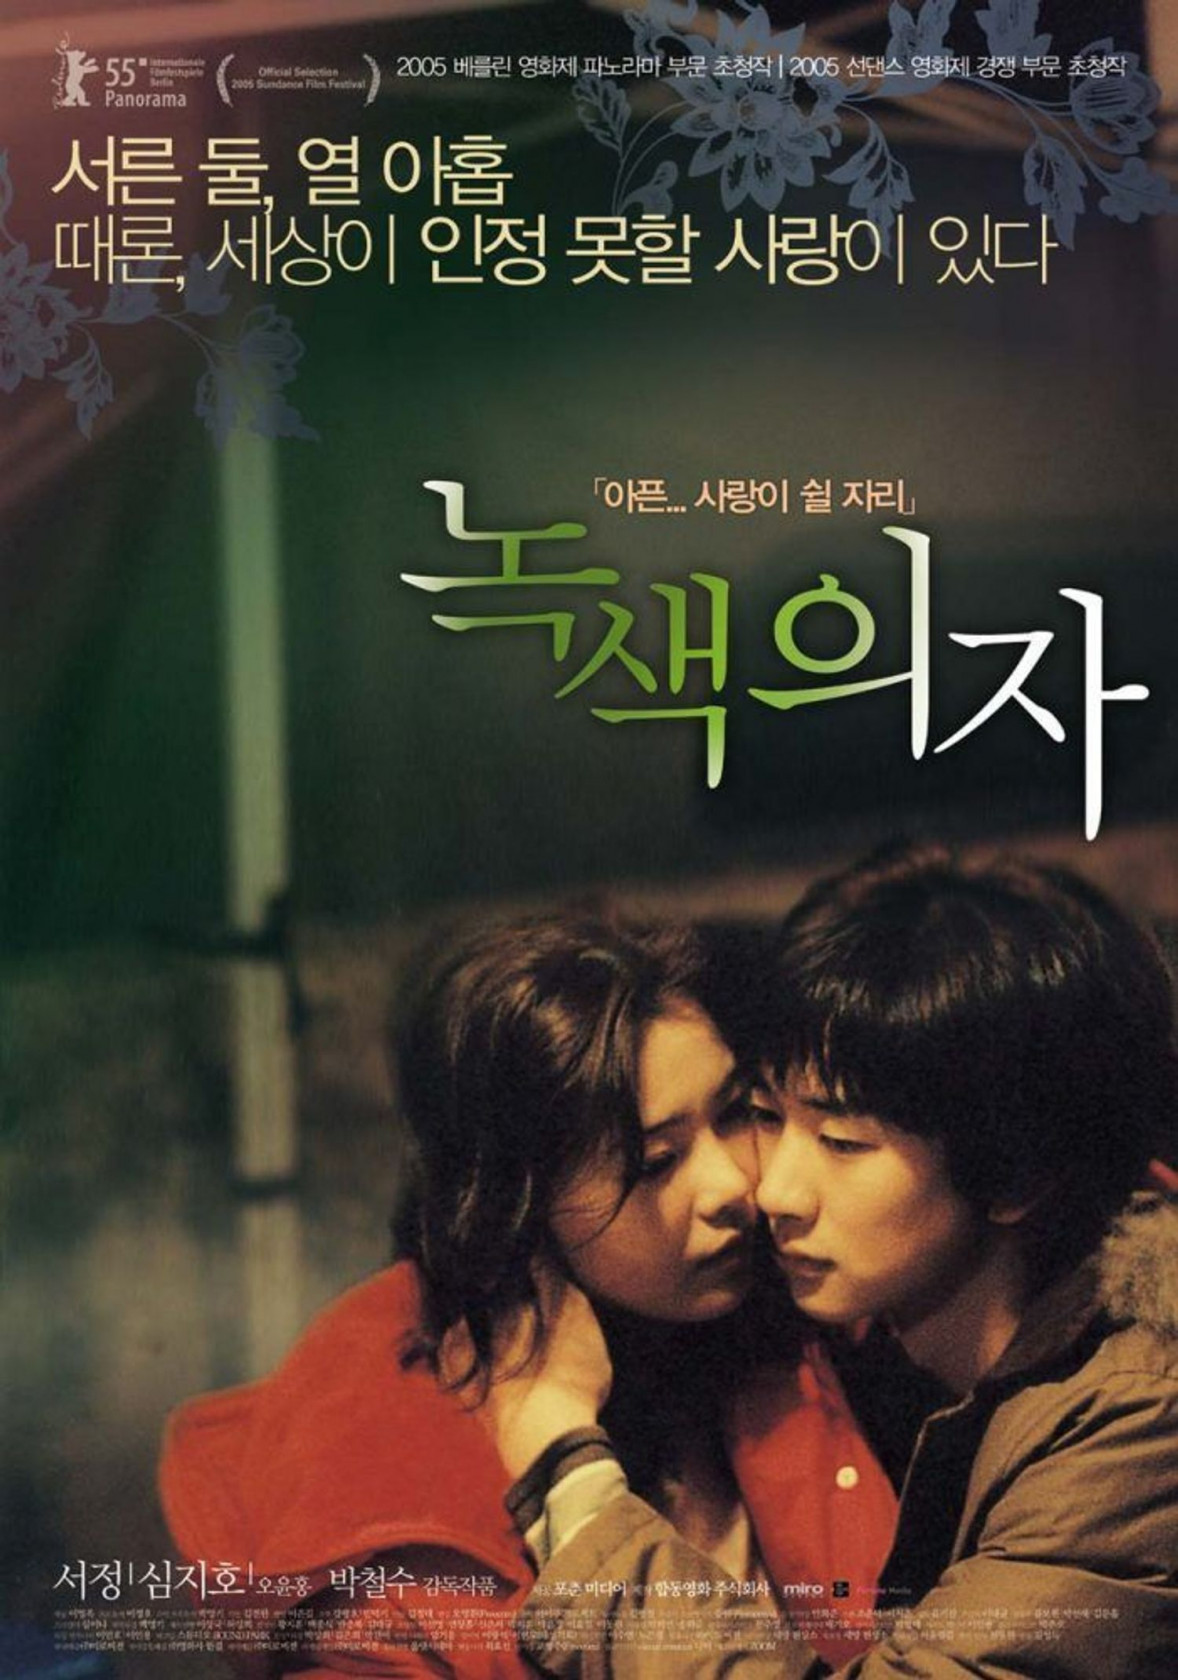 Green Chair 2013 - Love Conceptually (녹색의자 2013 - 러브 컨셉츄얼리) - Movie ...